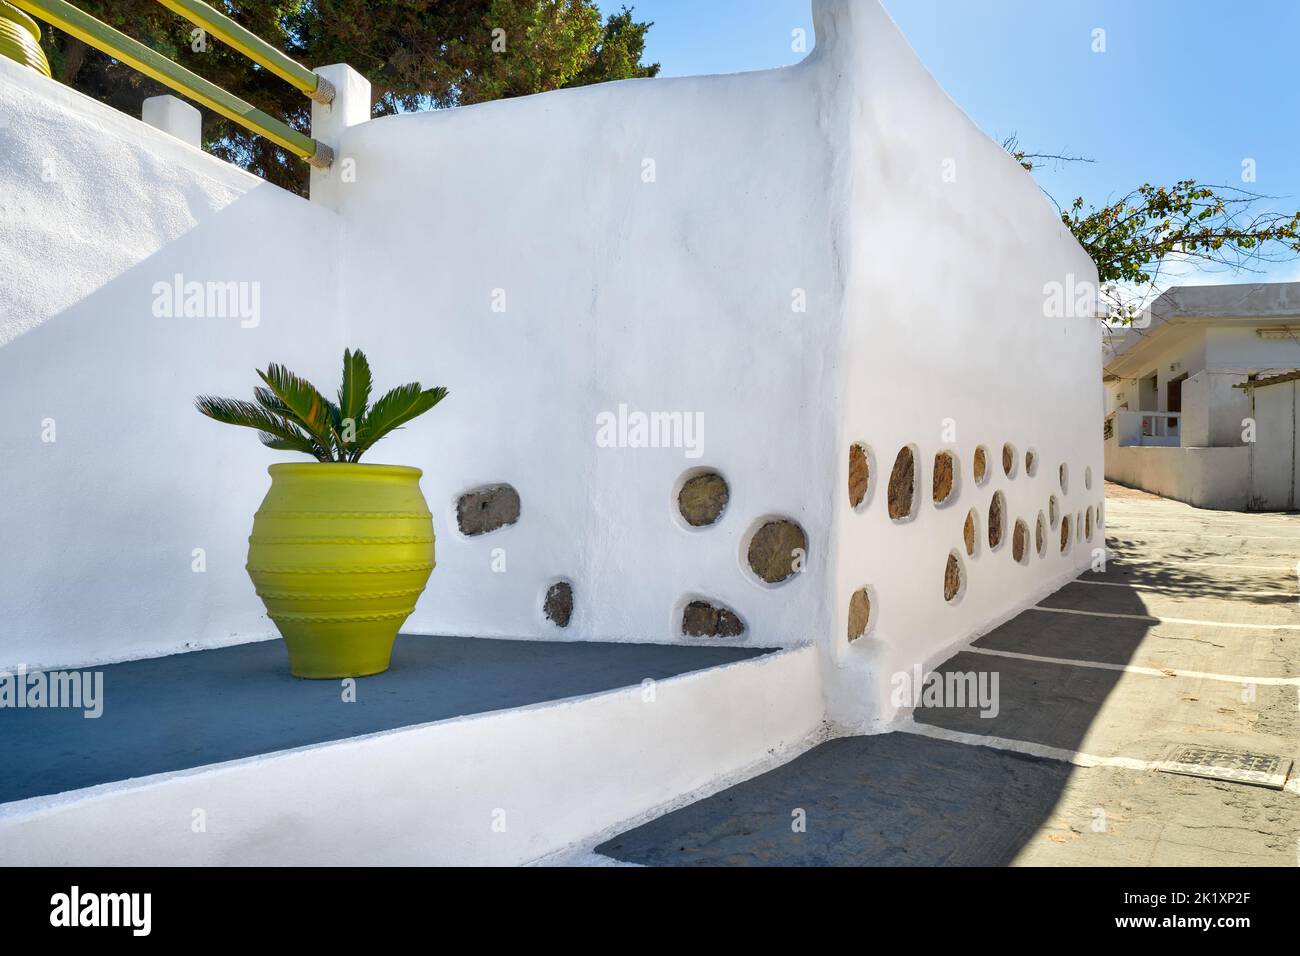 Stylish Mediterranean alleyway or street, classic whitewashed walls, stone pavement, decorative golden vase with palm seedling. Minimalistic design Stock Photo